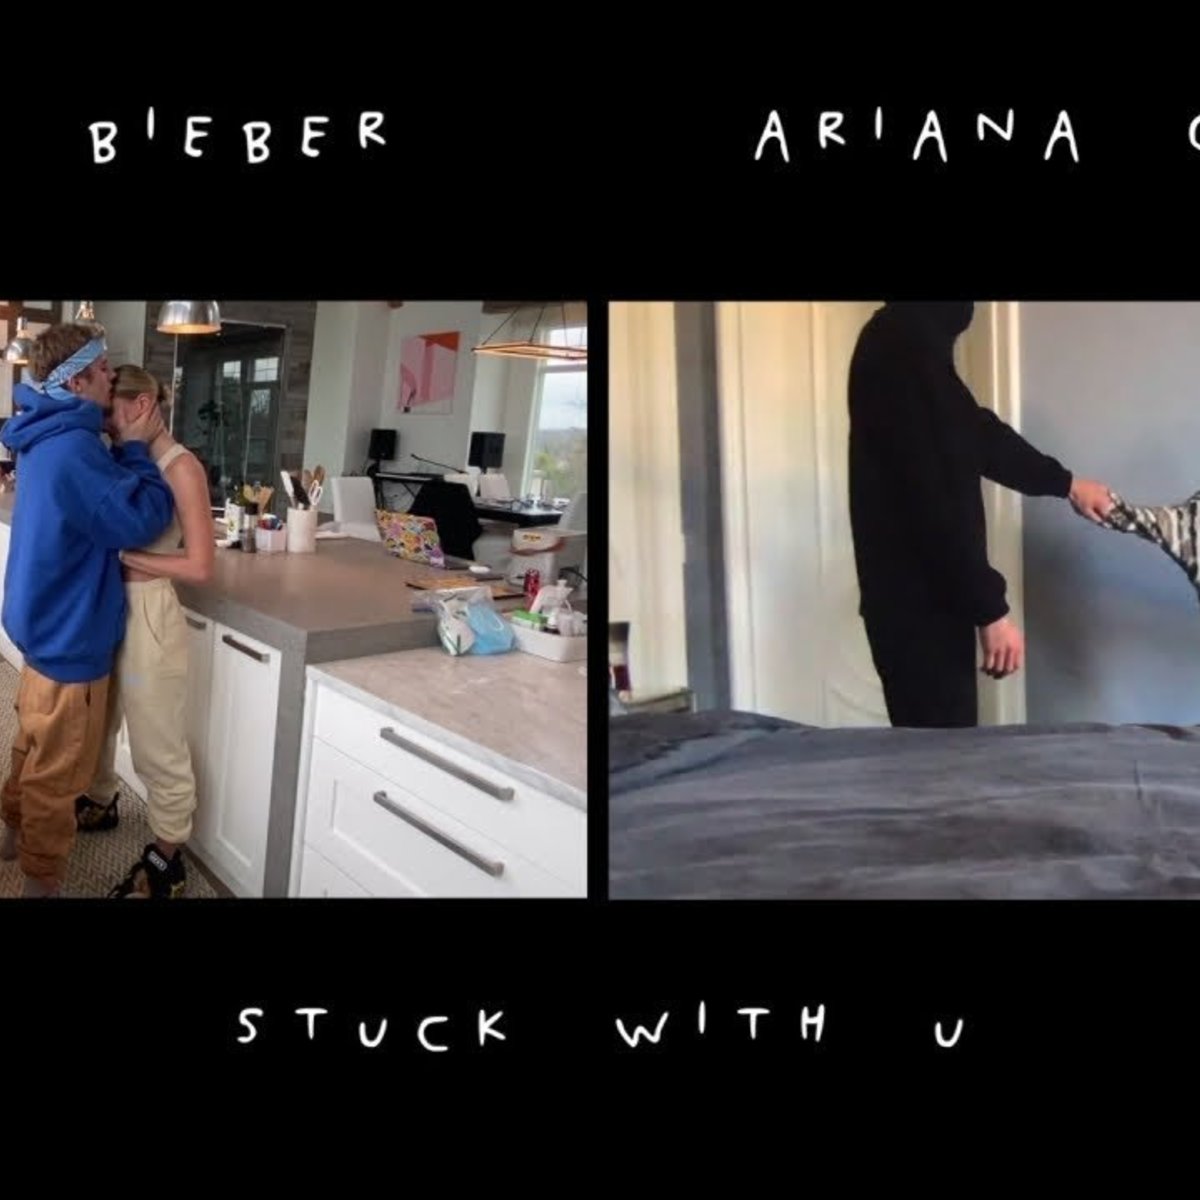 Confira a letra completa da música #StuckWithU, do Justin Bieber e